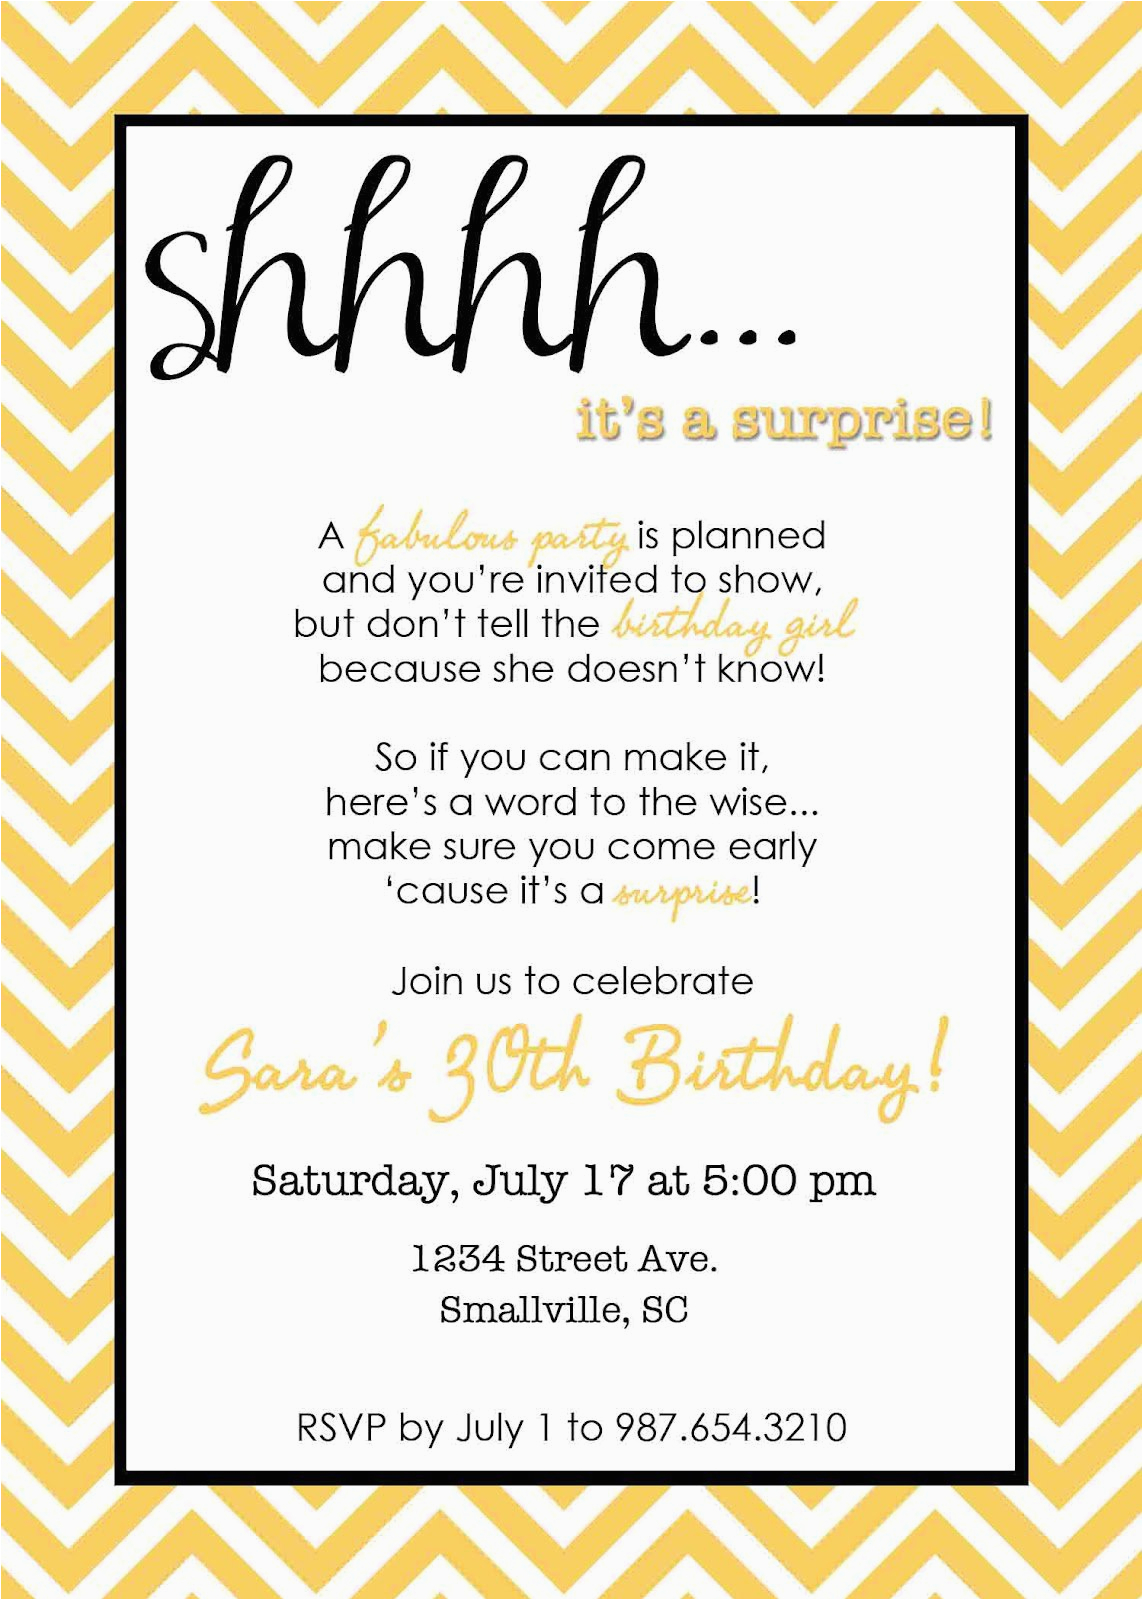 11th birthday party invitation wording